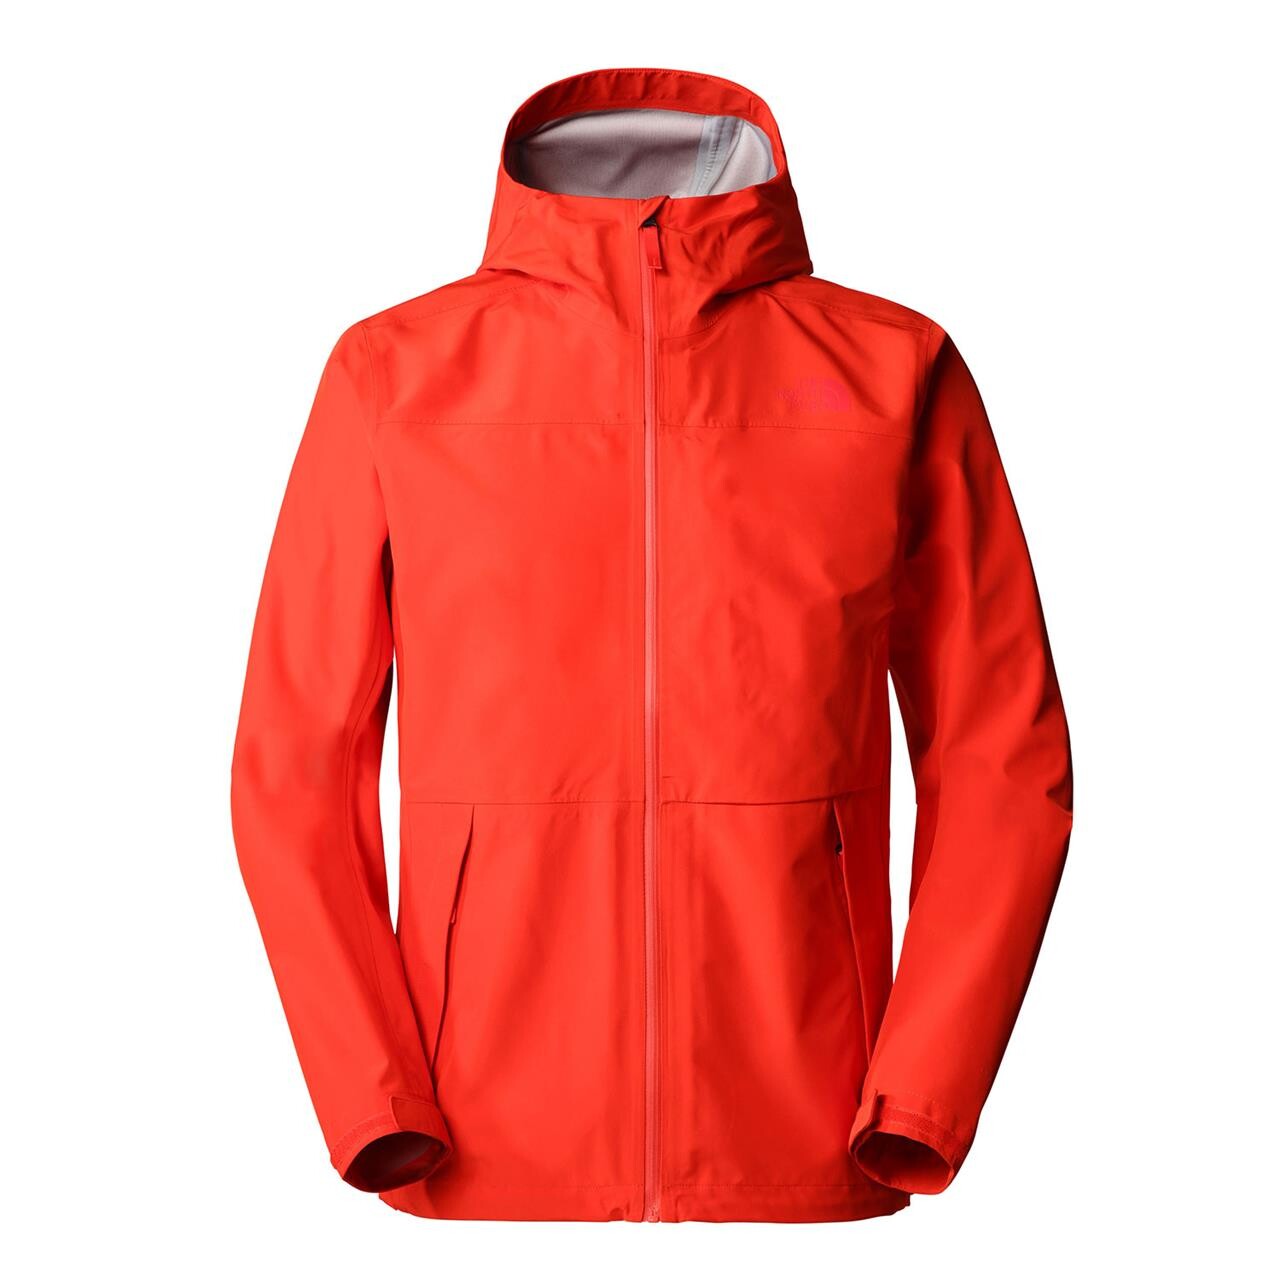 Se The North Face Mens Dryzzle Futurelight Jacket (Rød (FIERY RED) Large) hos Friluftsland.dk